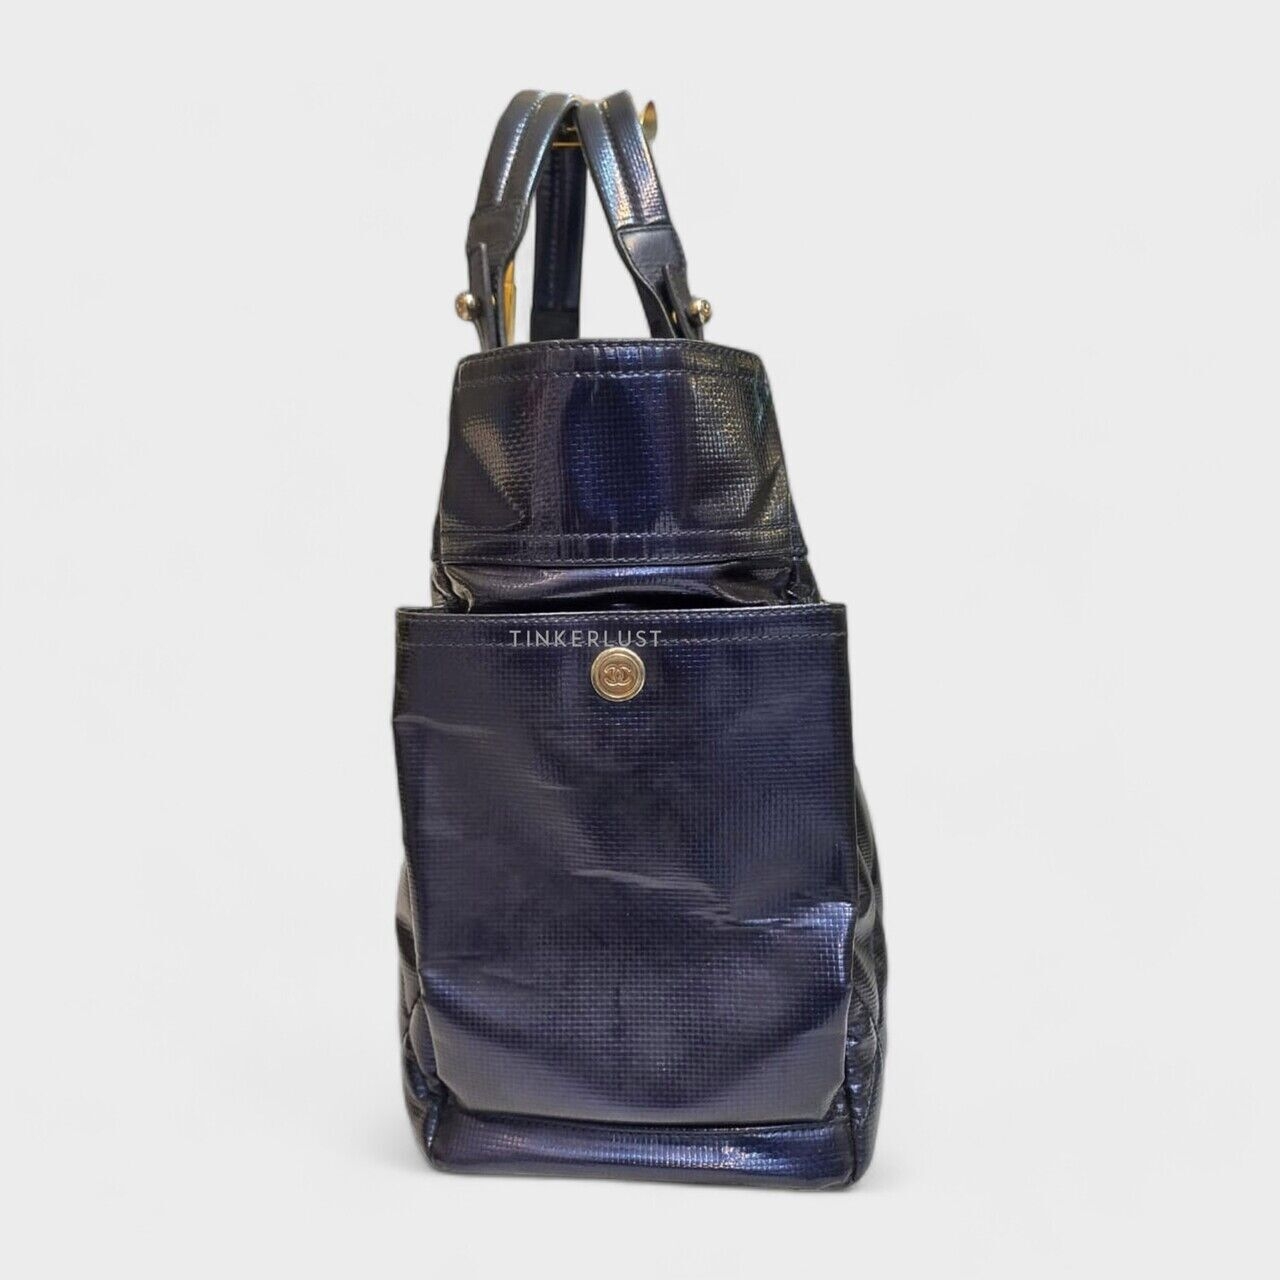 Chanel Biaritz Metallic Purple #13 SHW Tote Bag